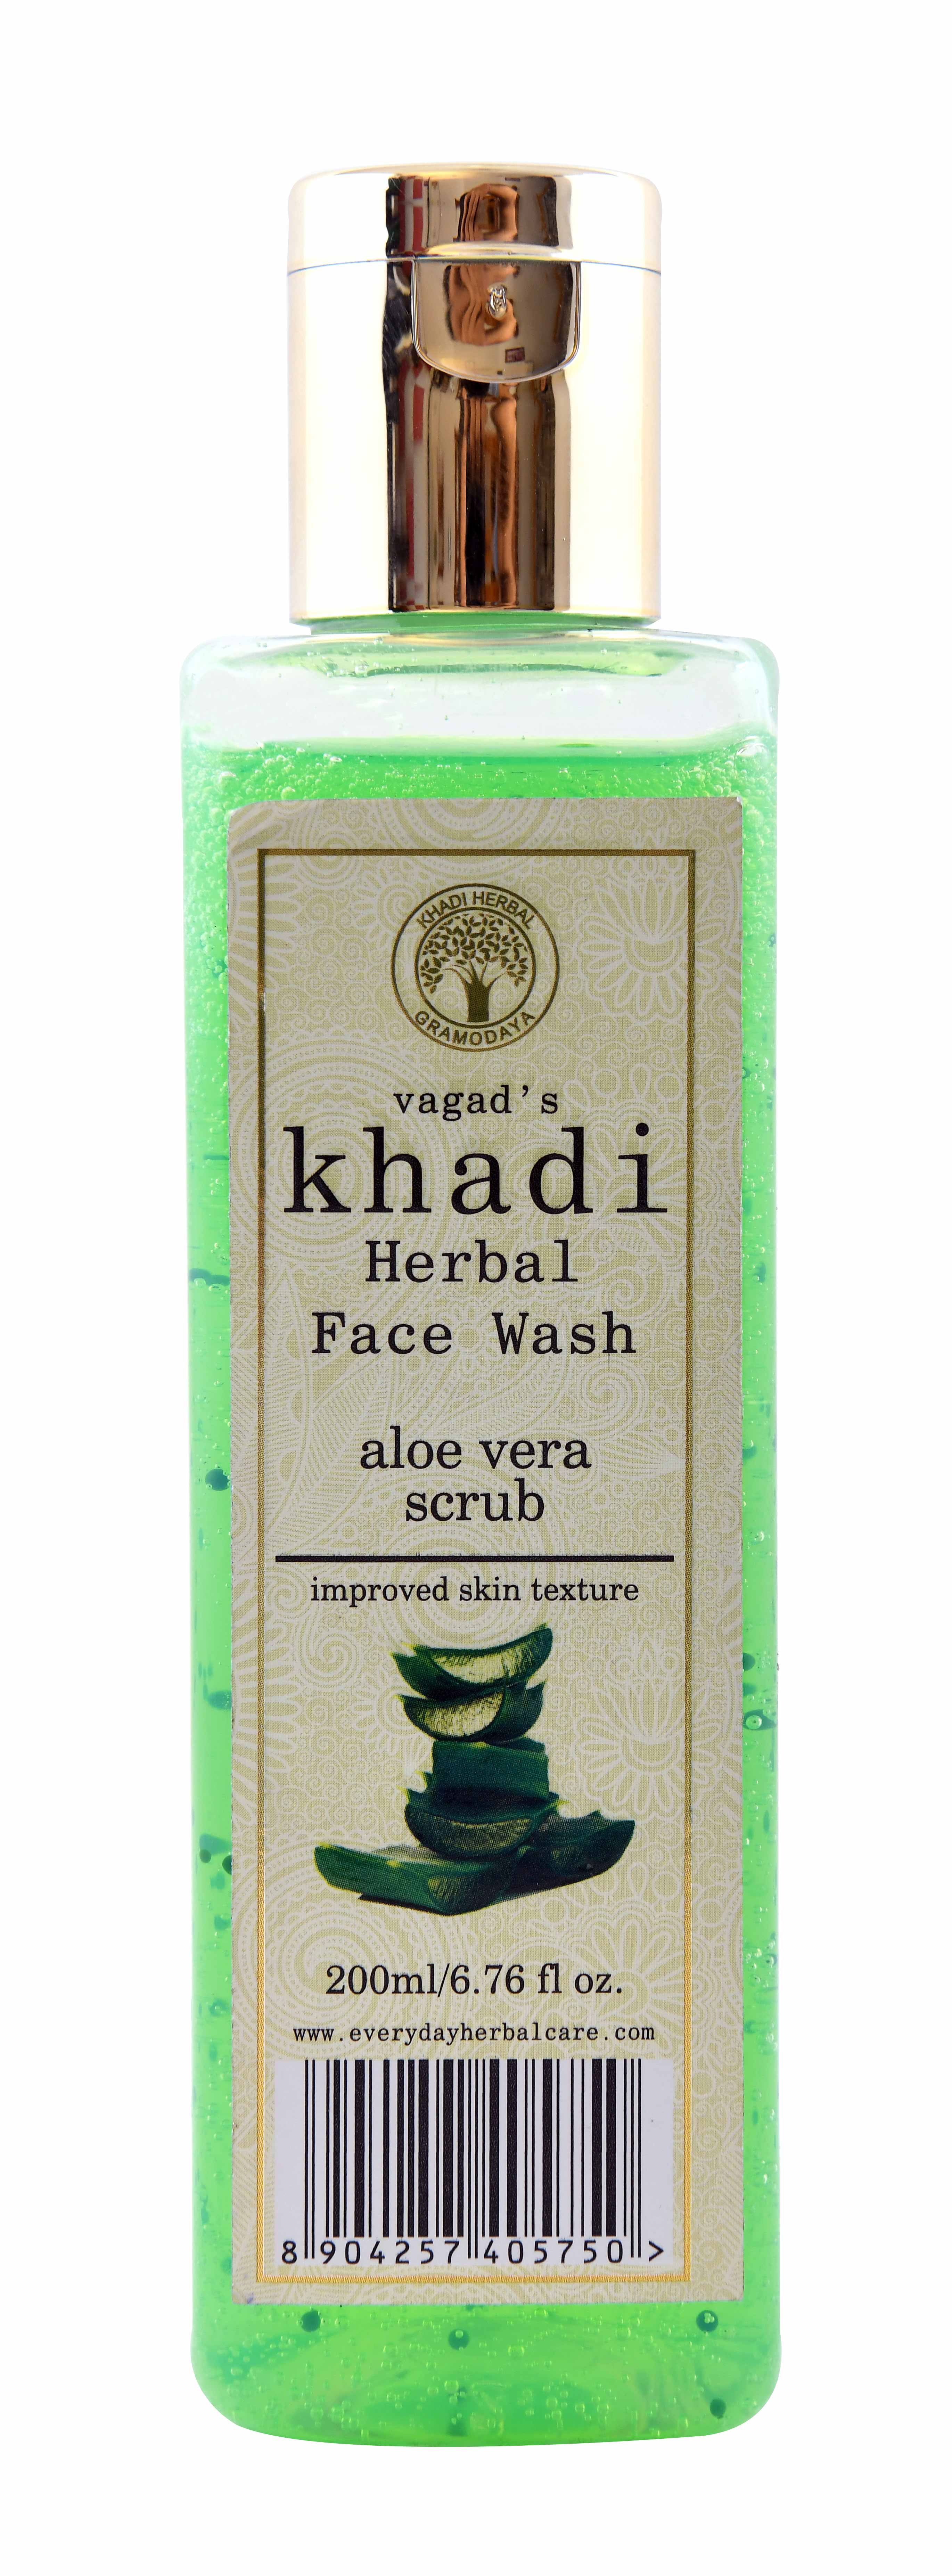 Buy Vagad's Khadi Aloevera Scrub Face Wash at Best Price Online